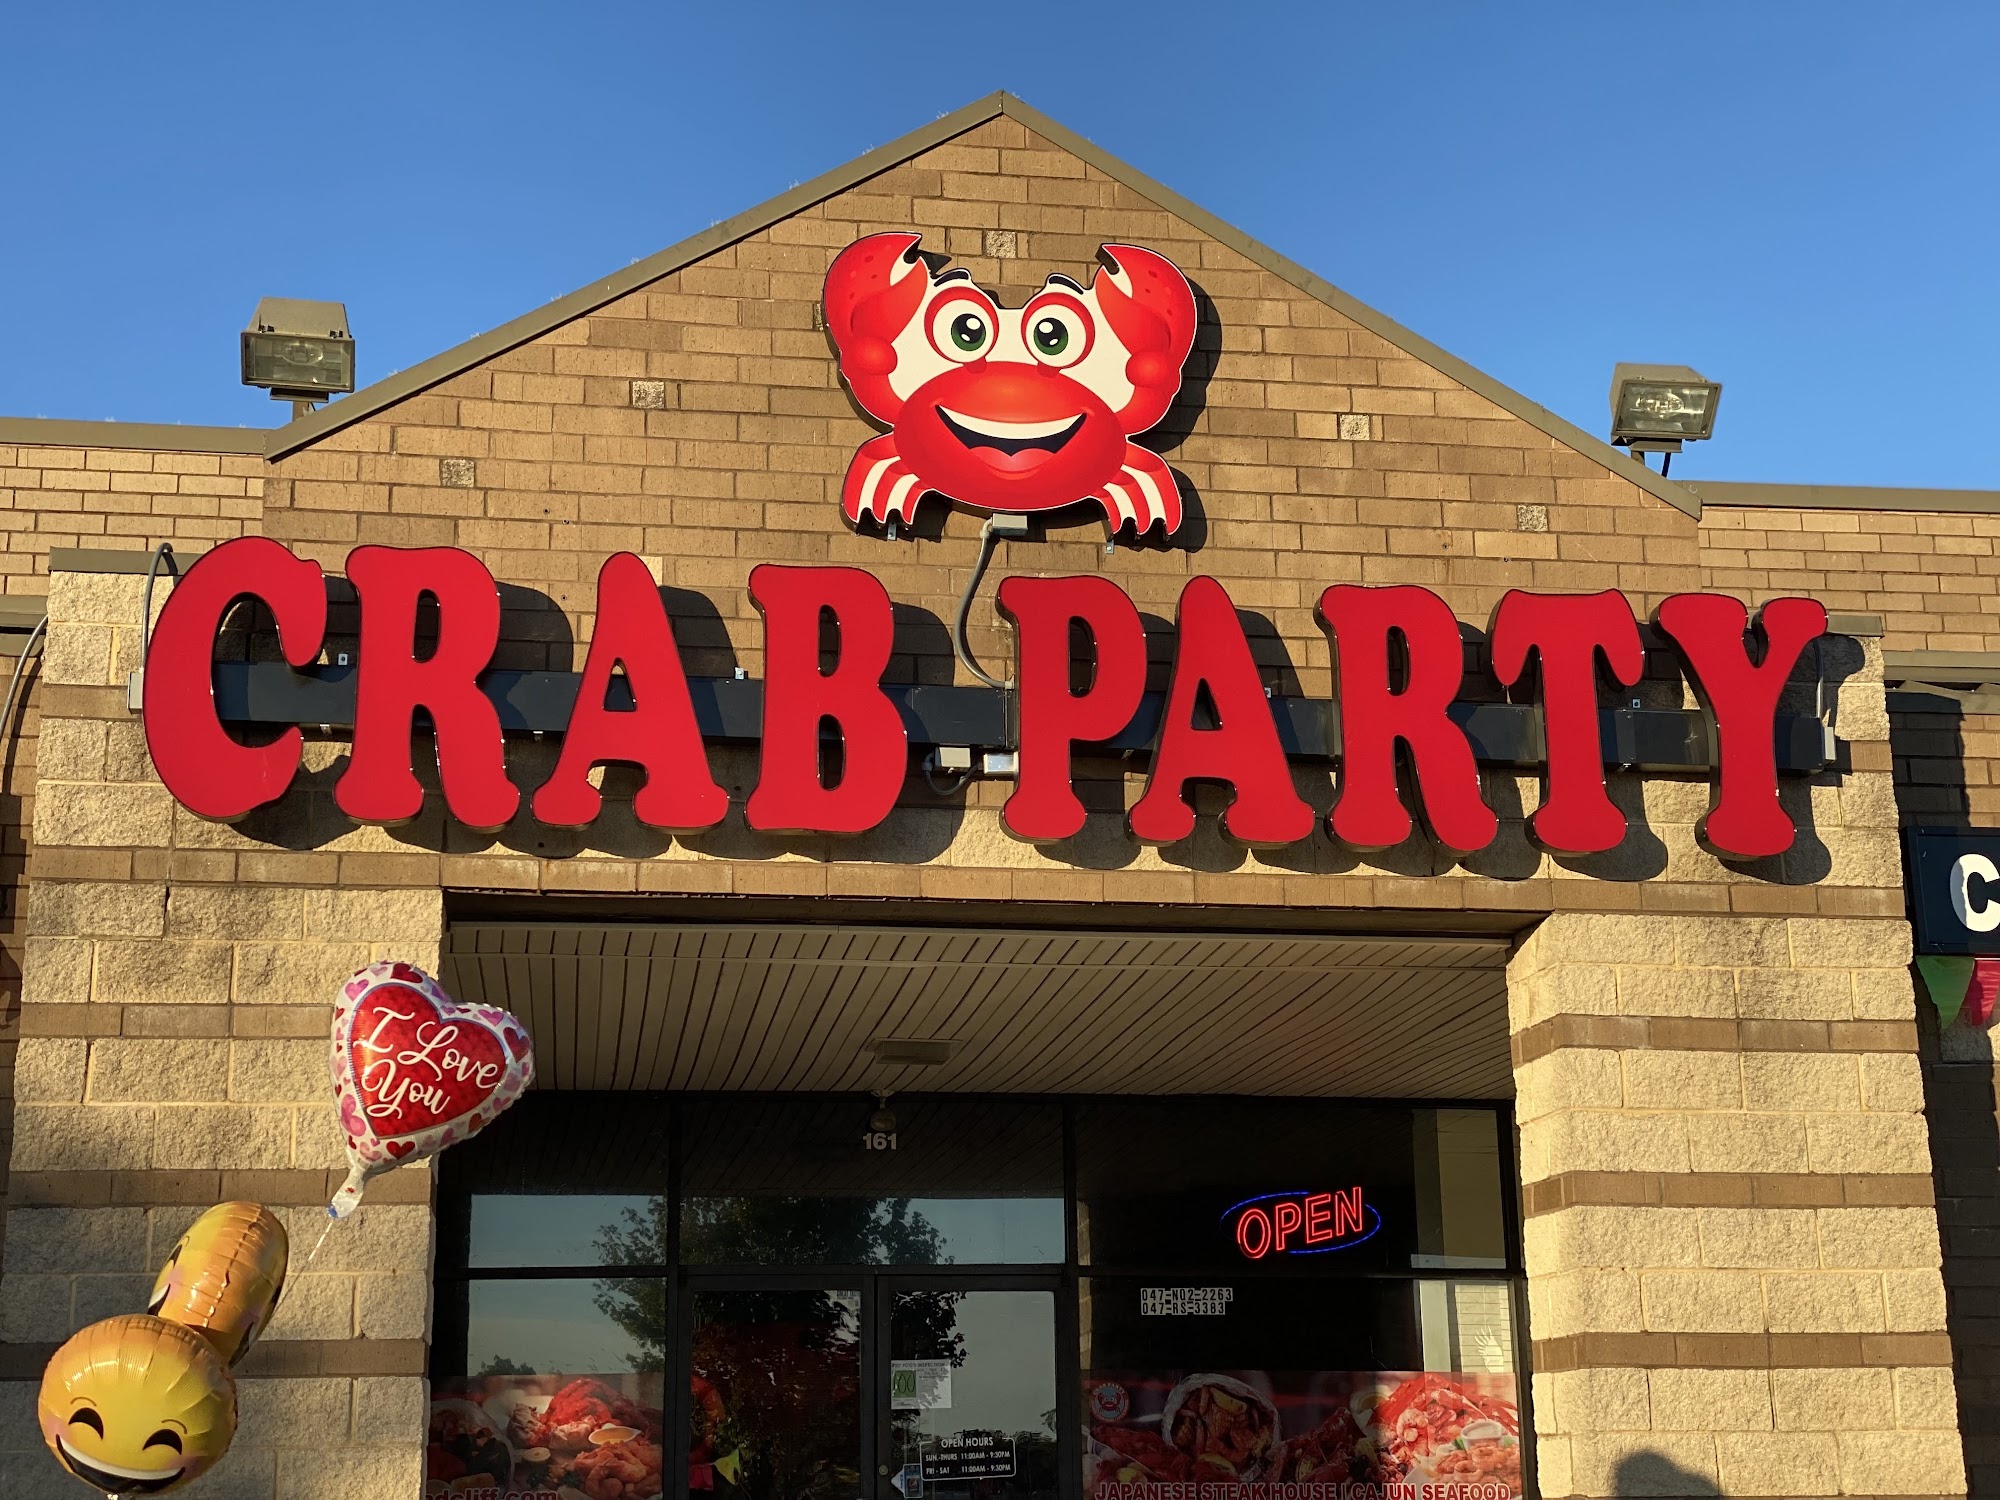 Crab Party